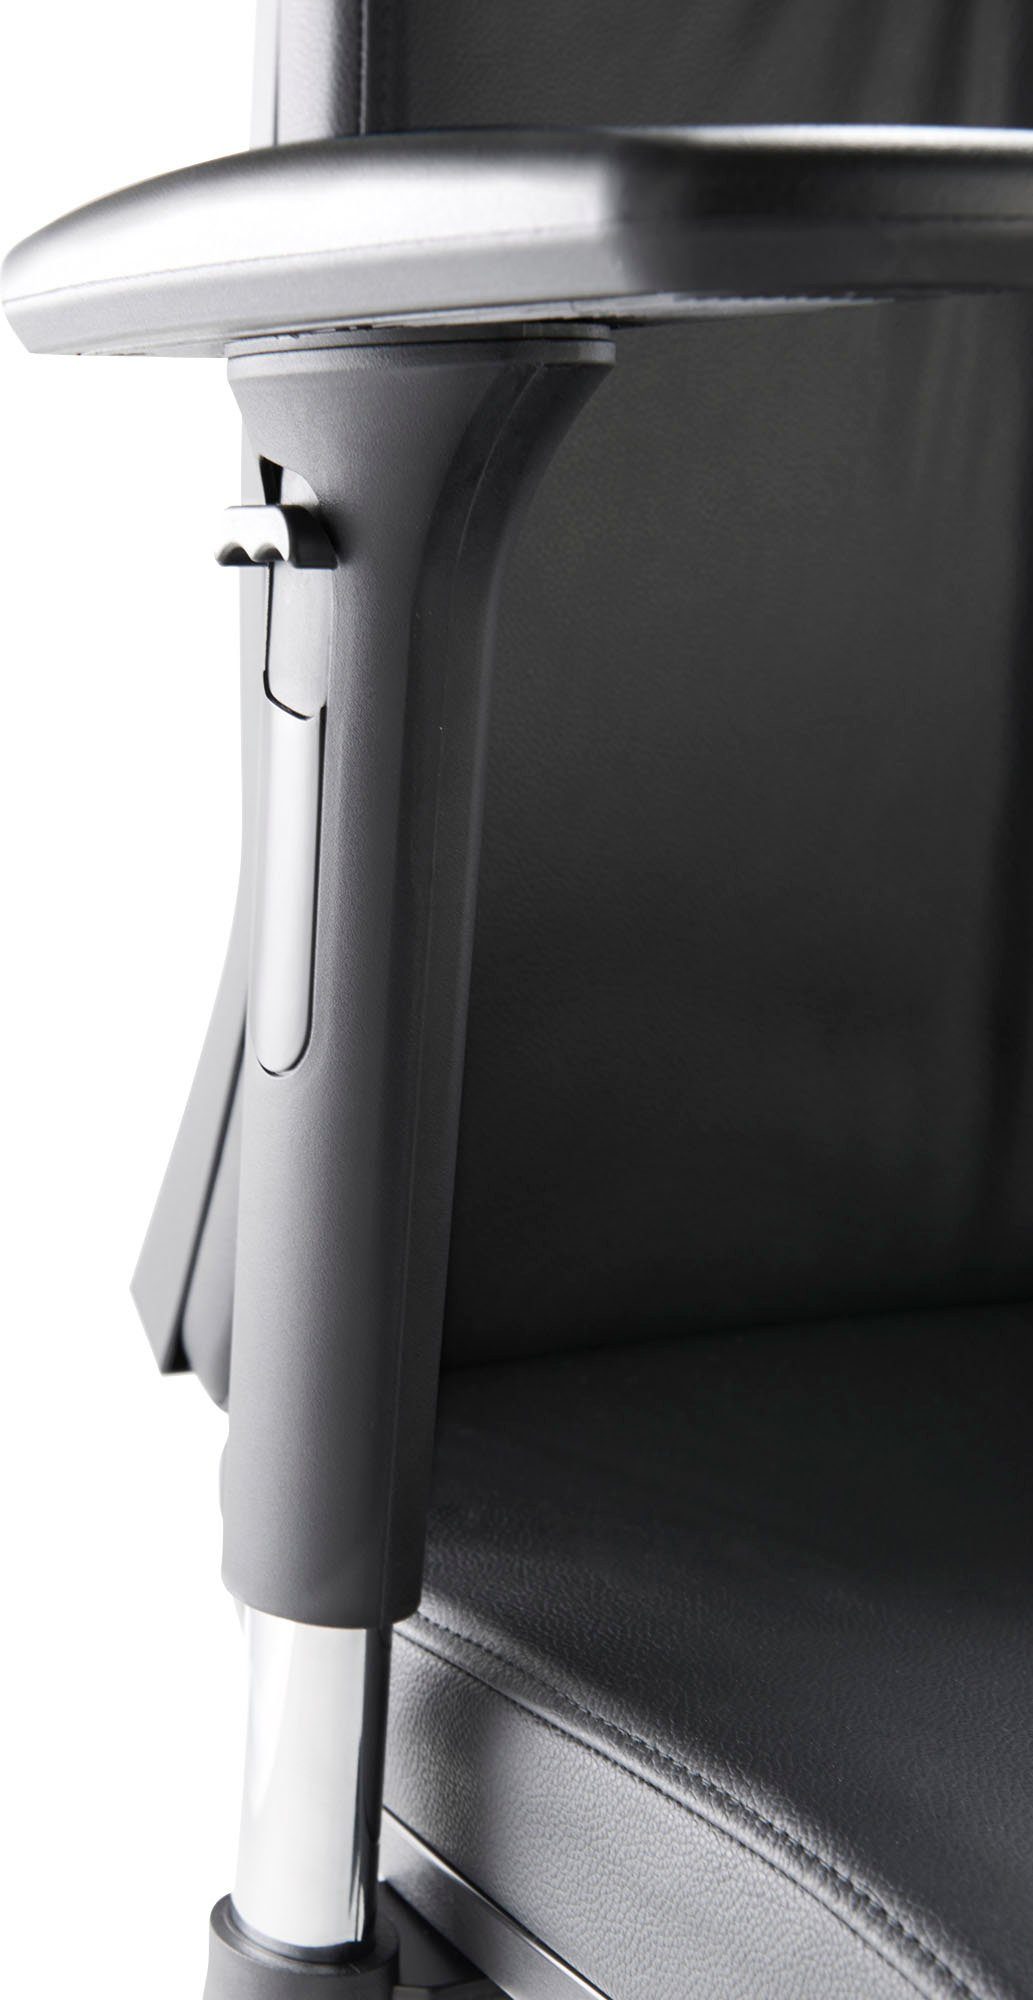 Mayer Sitzmöbel Chefsessel Drehstuhl myCONTRACT verstellbare Rückenhöhe LINE, 7-fach Kopfstütze verstellbar